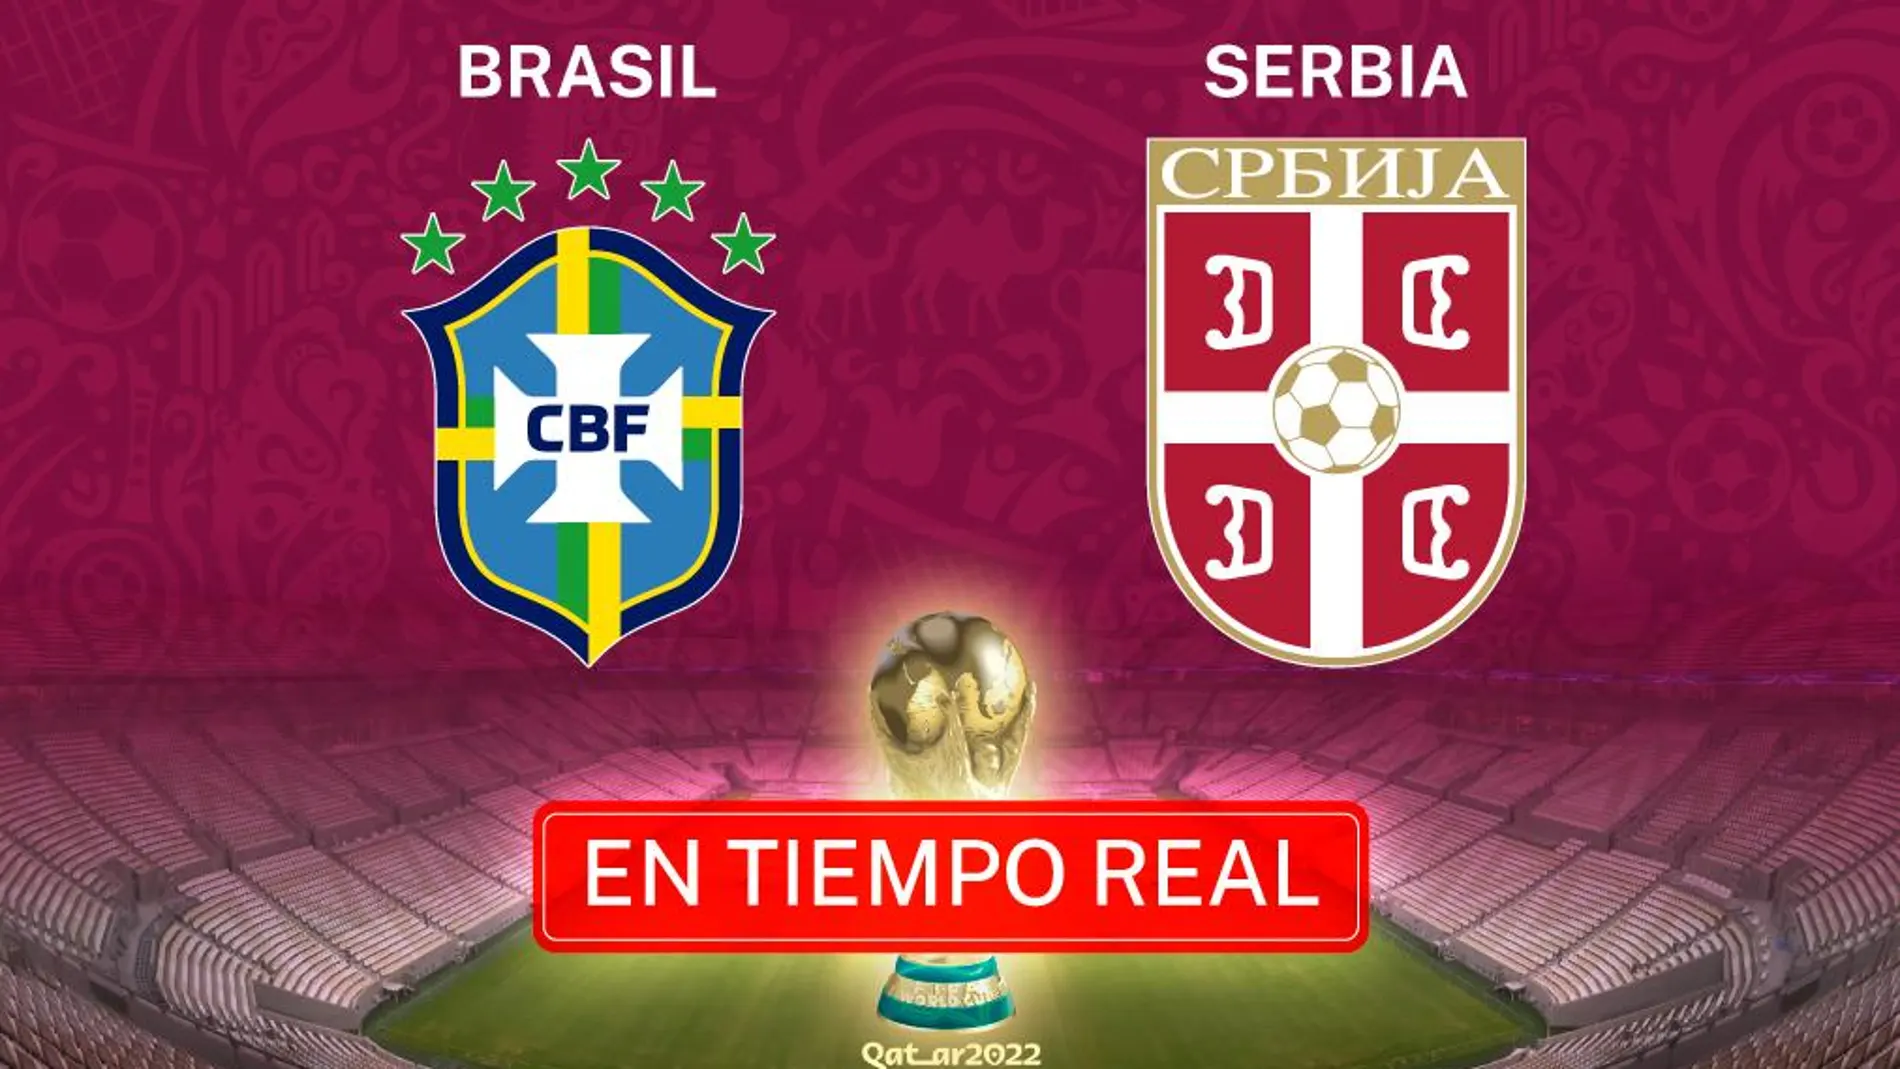 Qatar 2022 Brasil - Serbia